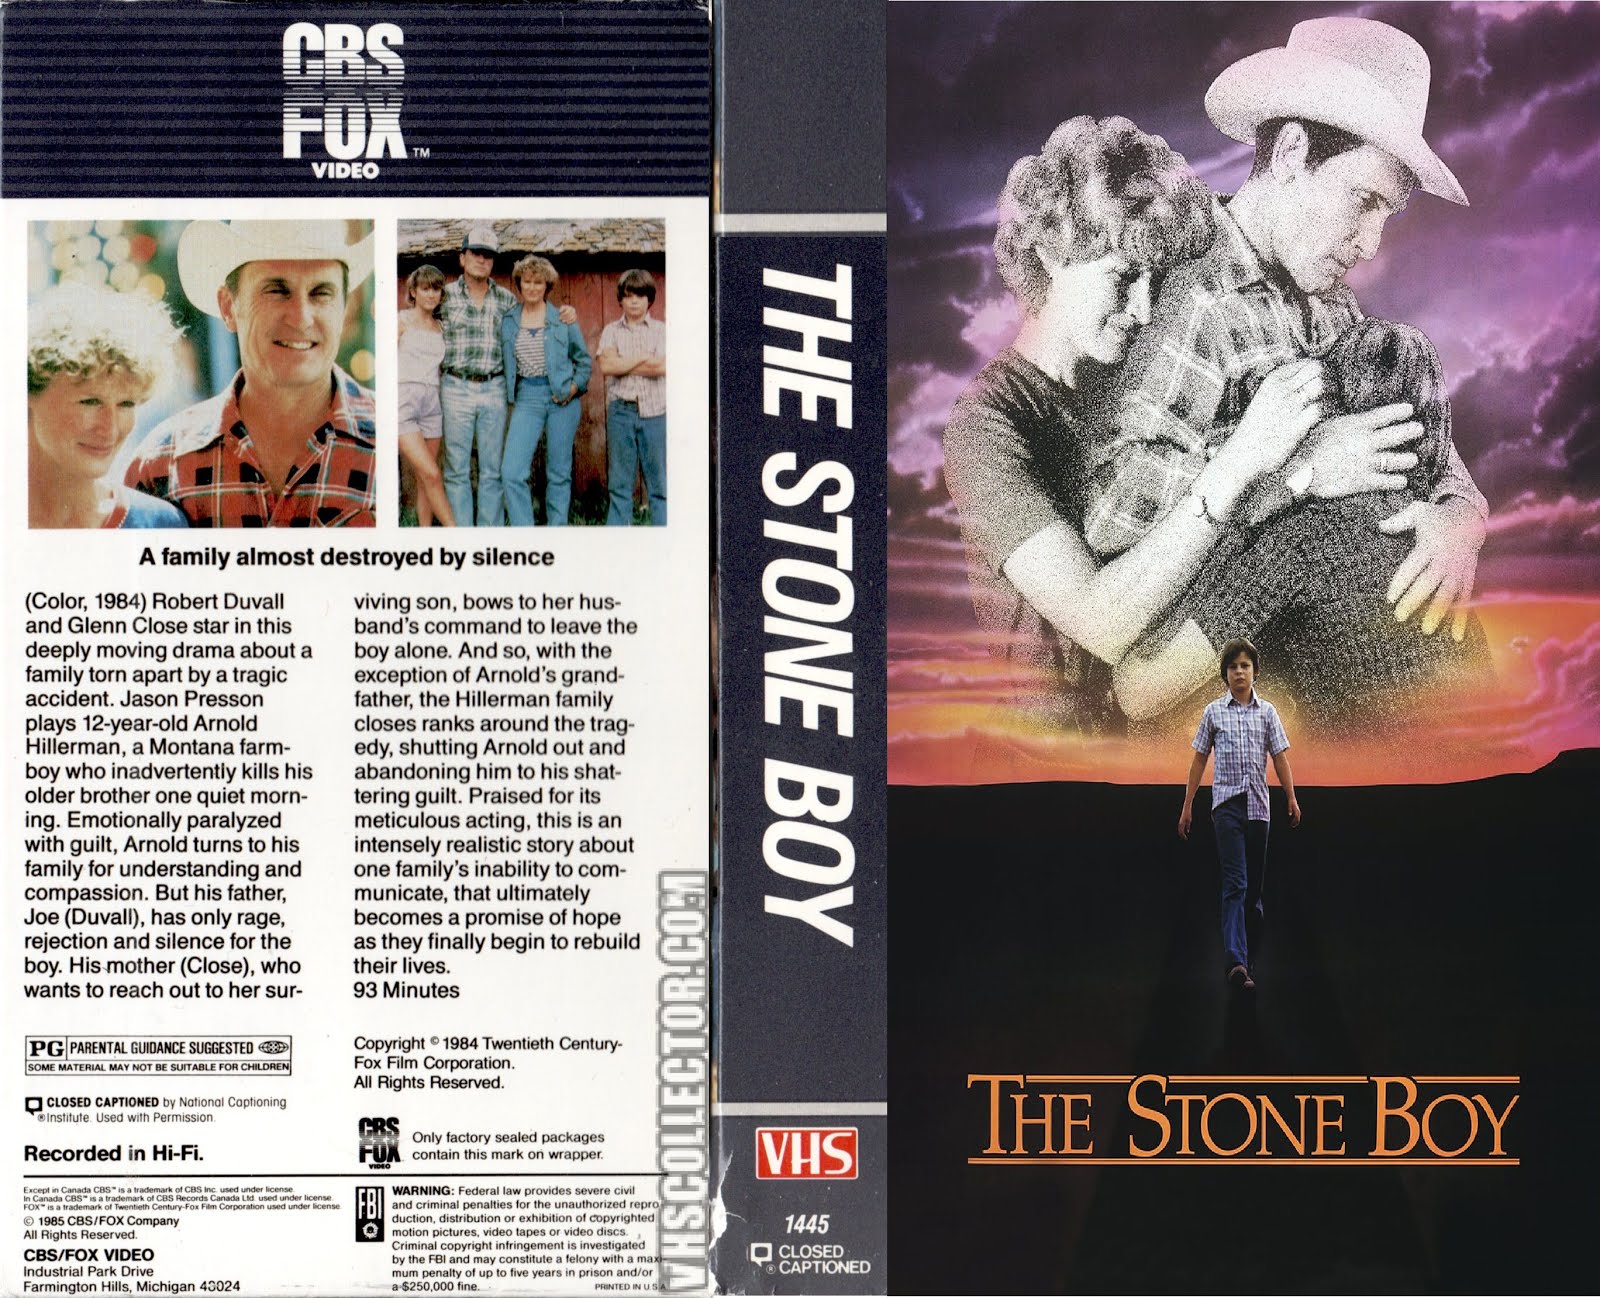 The Stone boy. 1984 Бойс картинка. Мом энд бойс 1984. Black Rose 1984 boys will be boys.